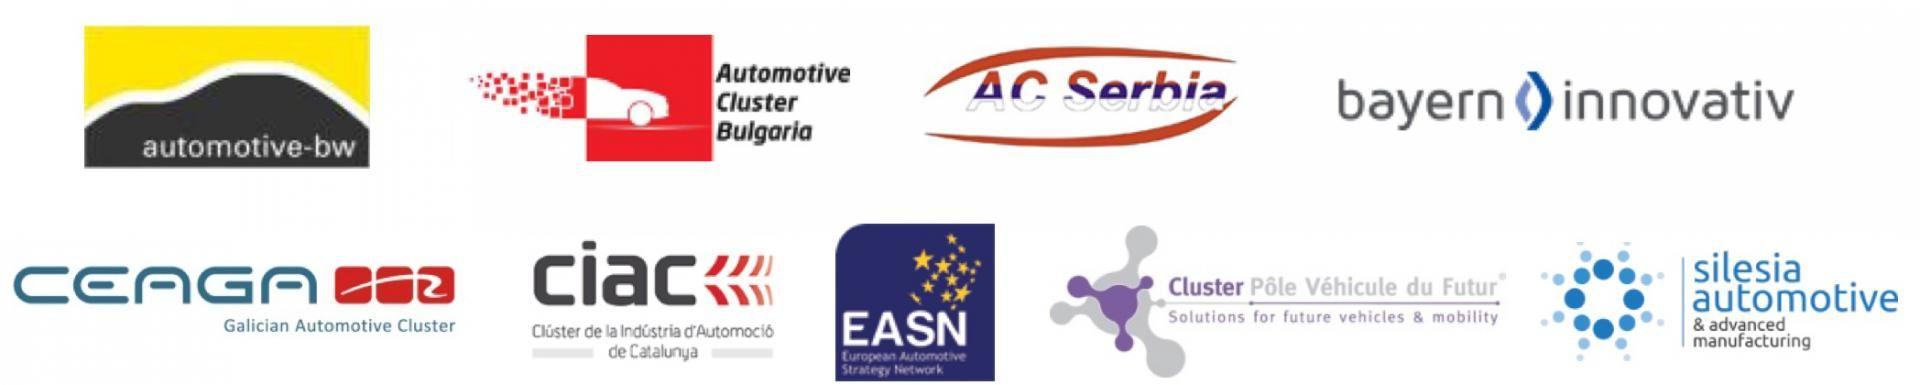 European Automotive Logo - European Automotive Cluster Network (EACN) Cluster